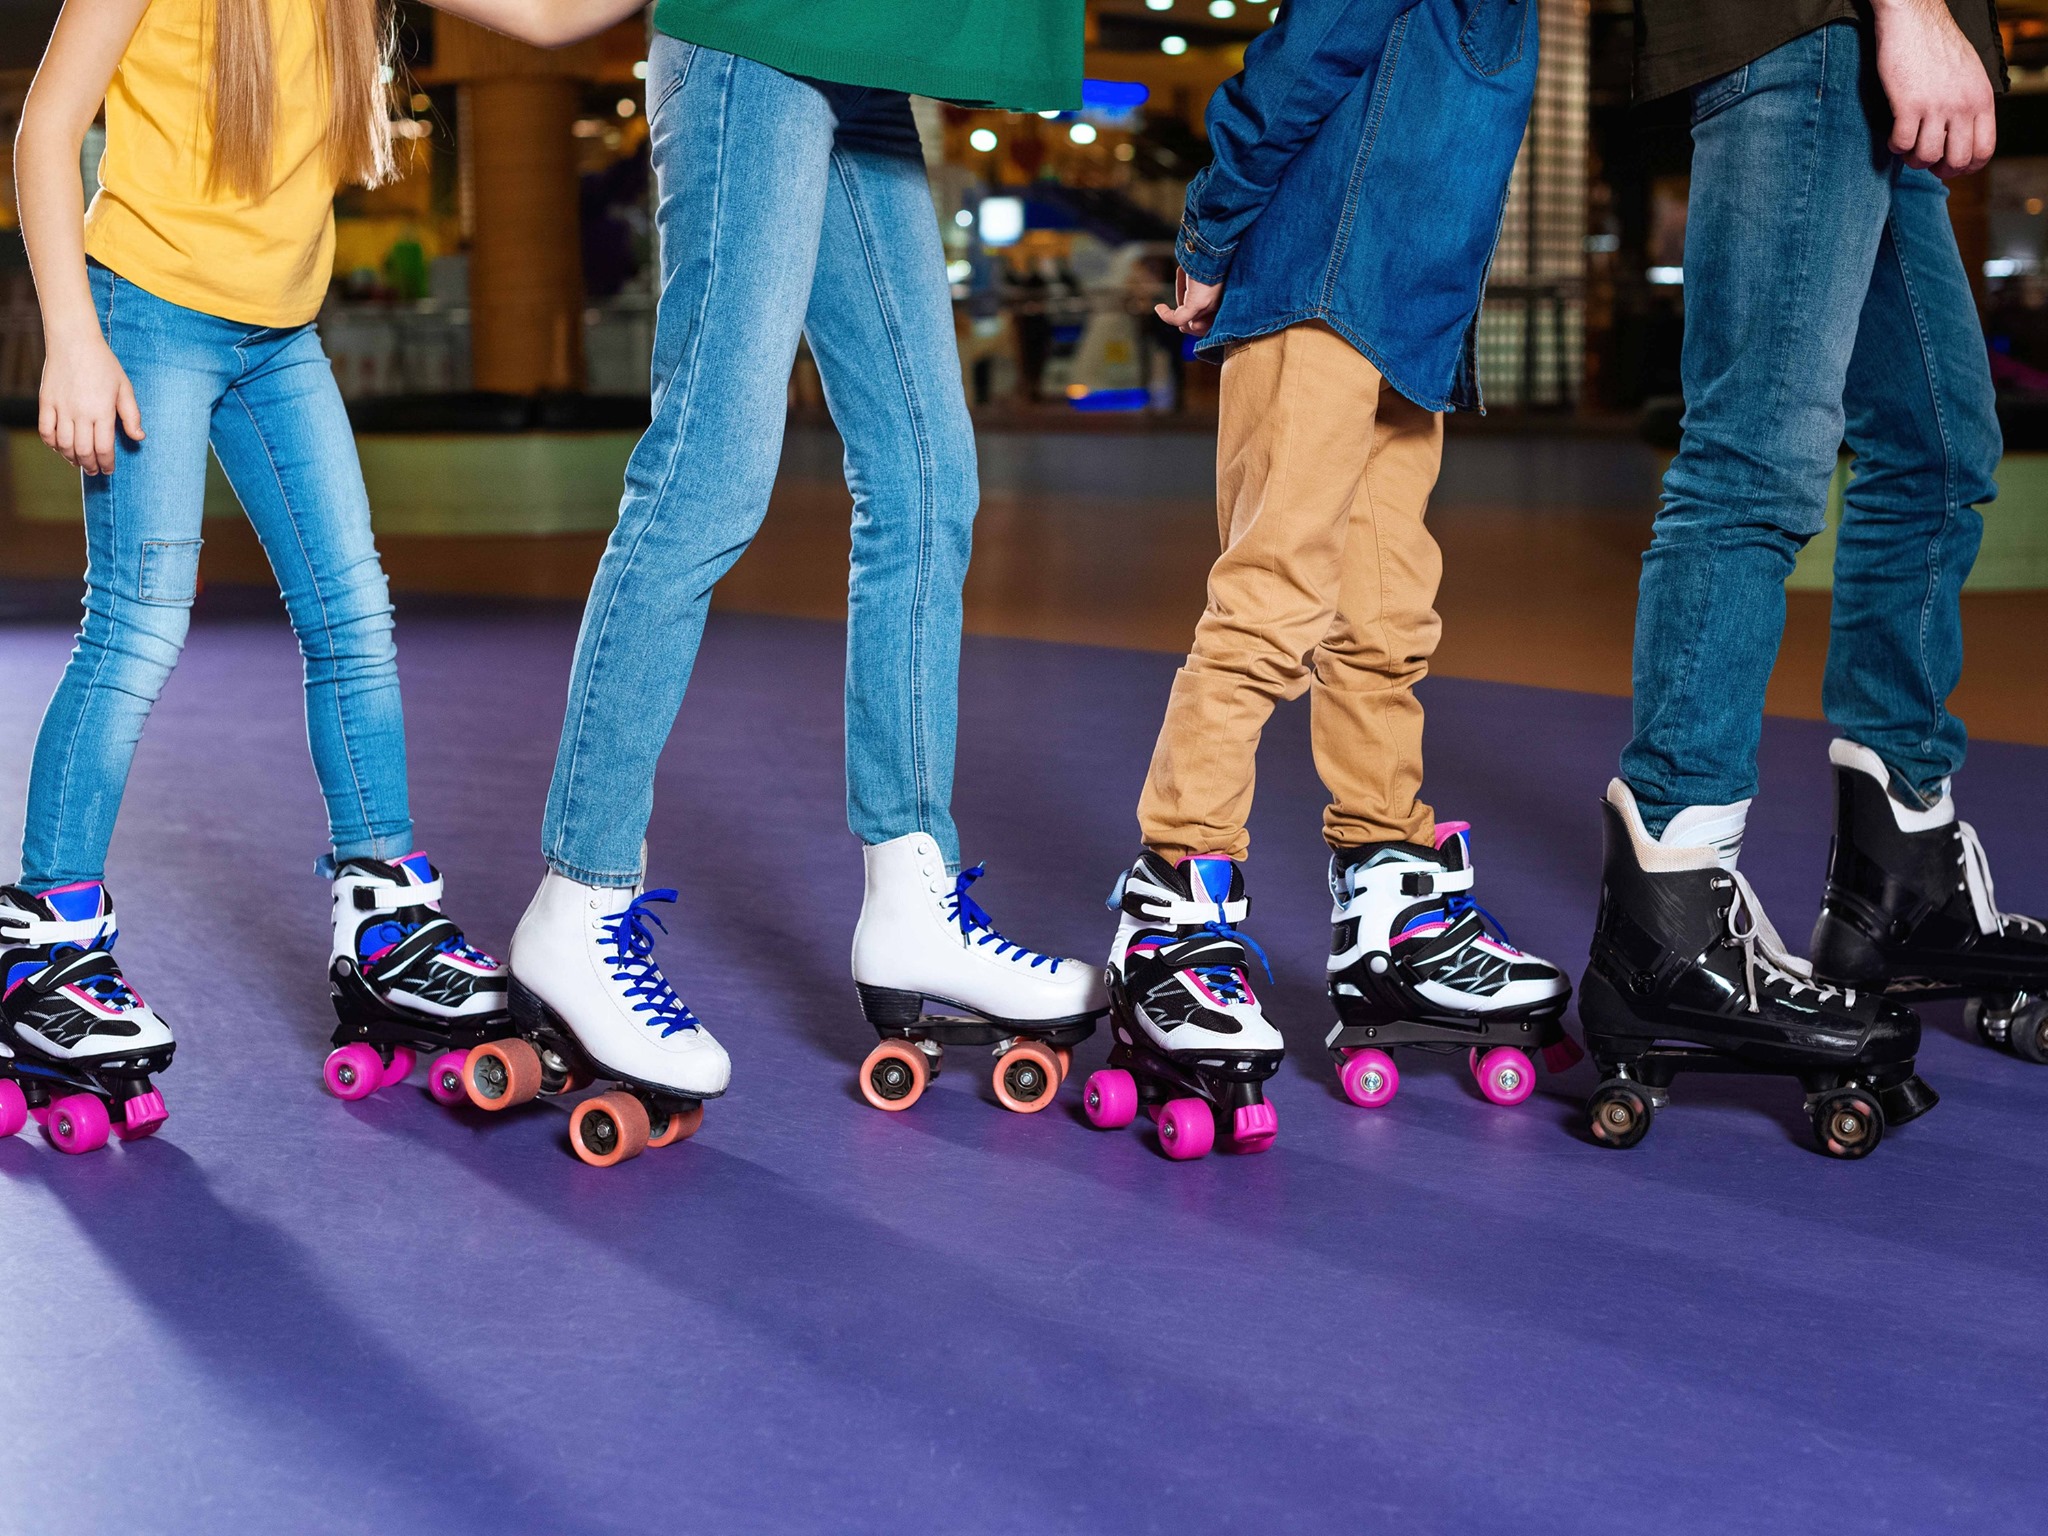 Free Family Roller Skating